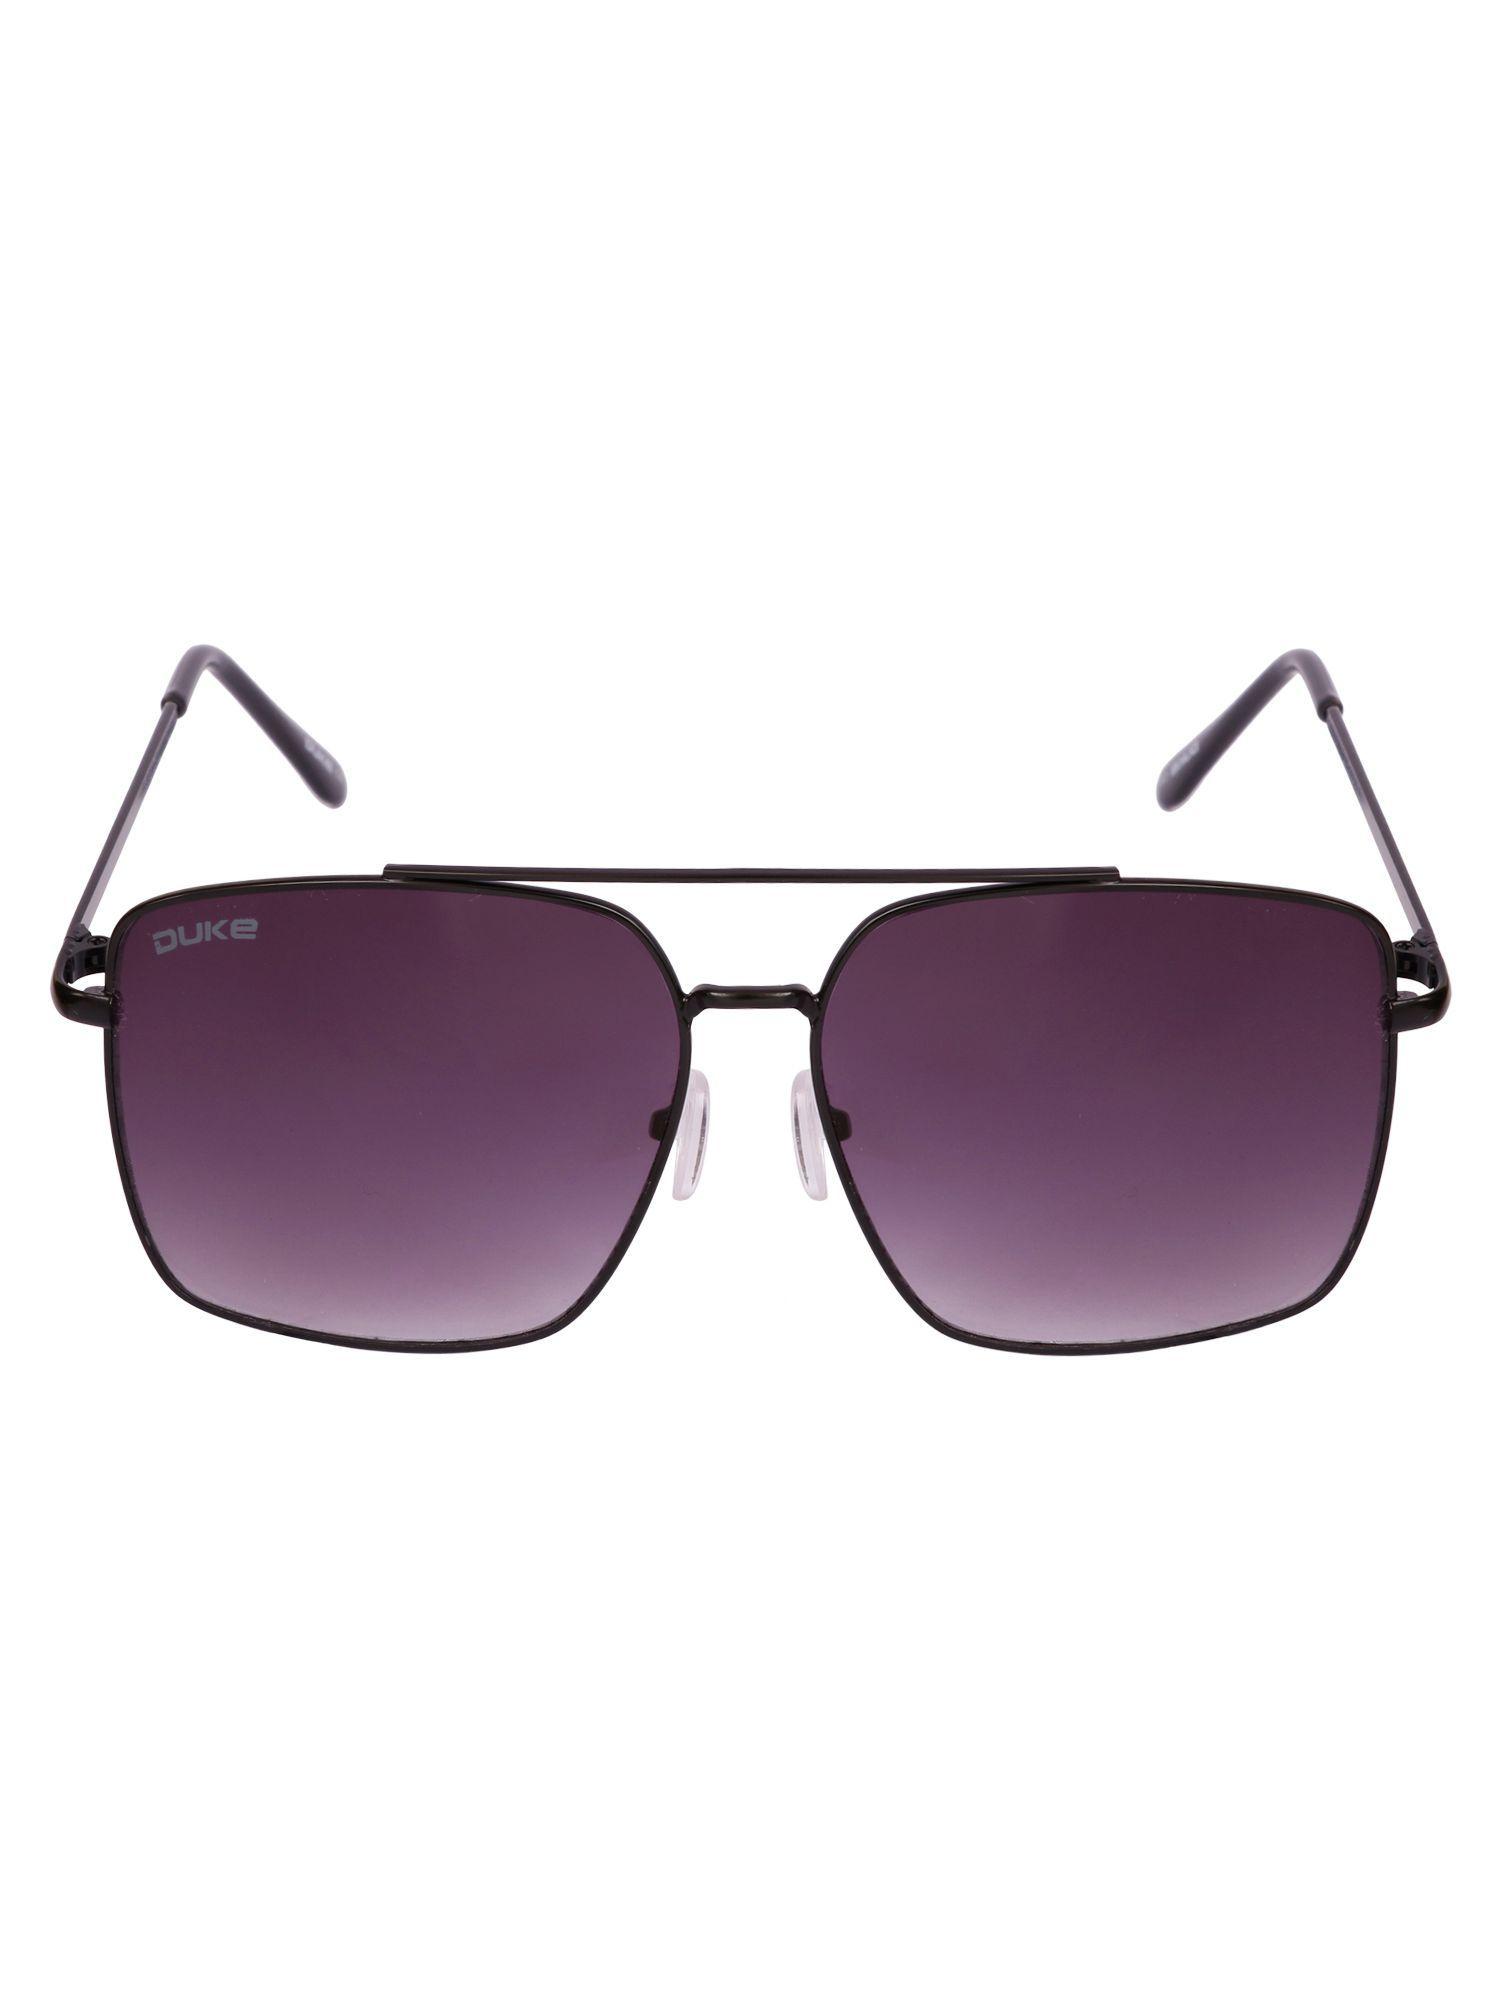 Polycarbonate UV 400 Women Square Sunglasses -DUKE-A1869-C8